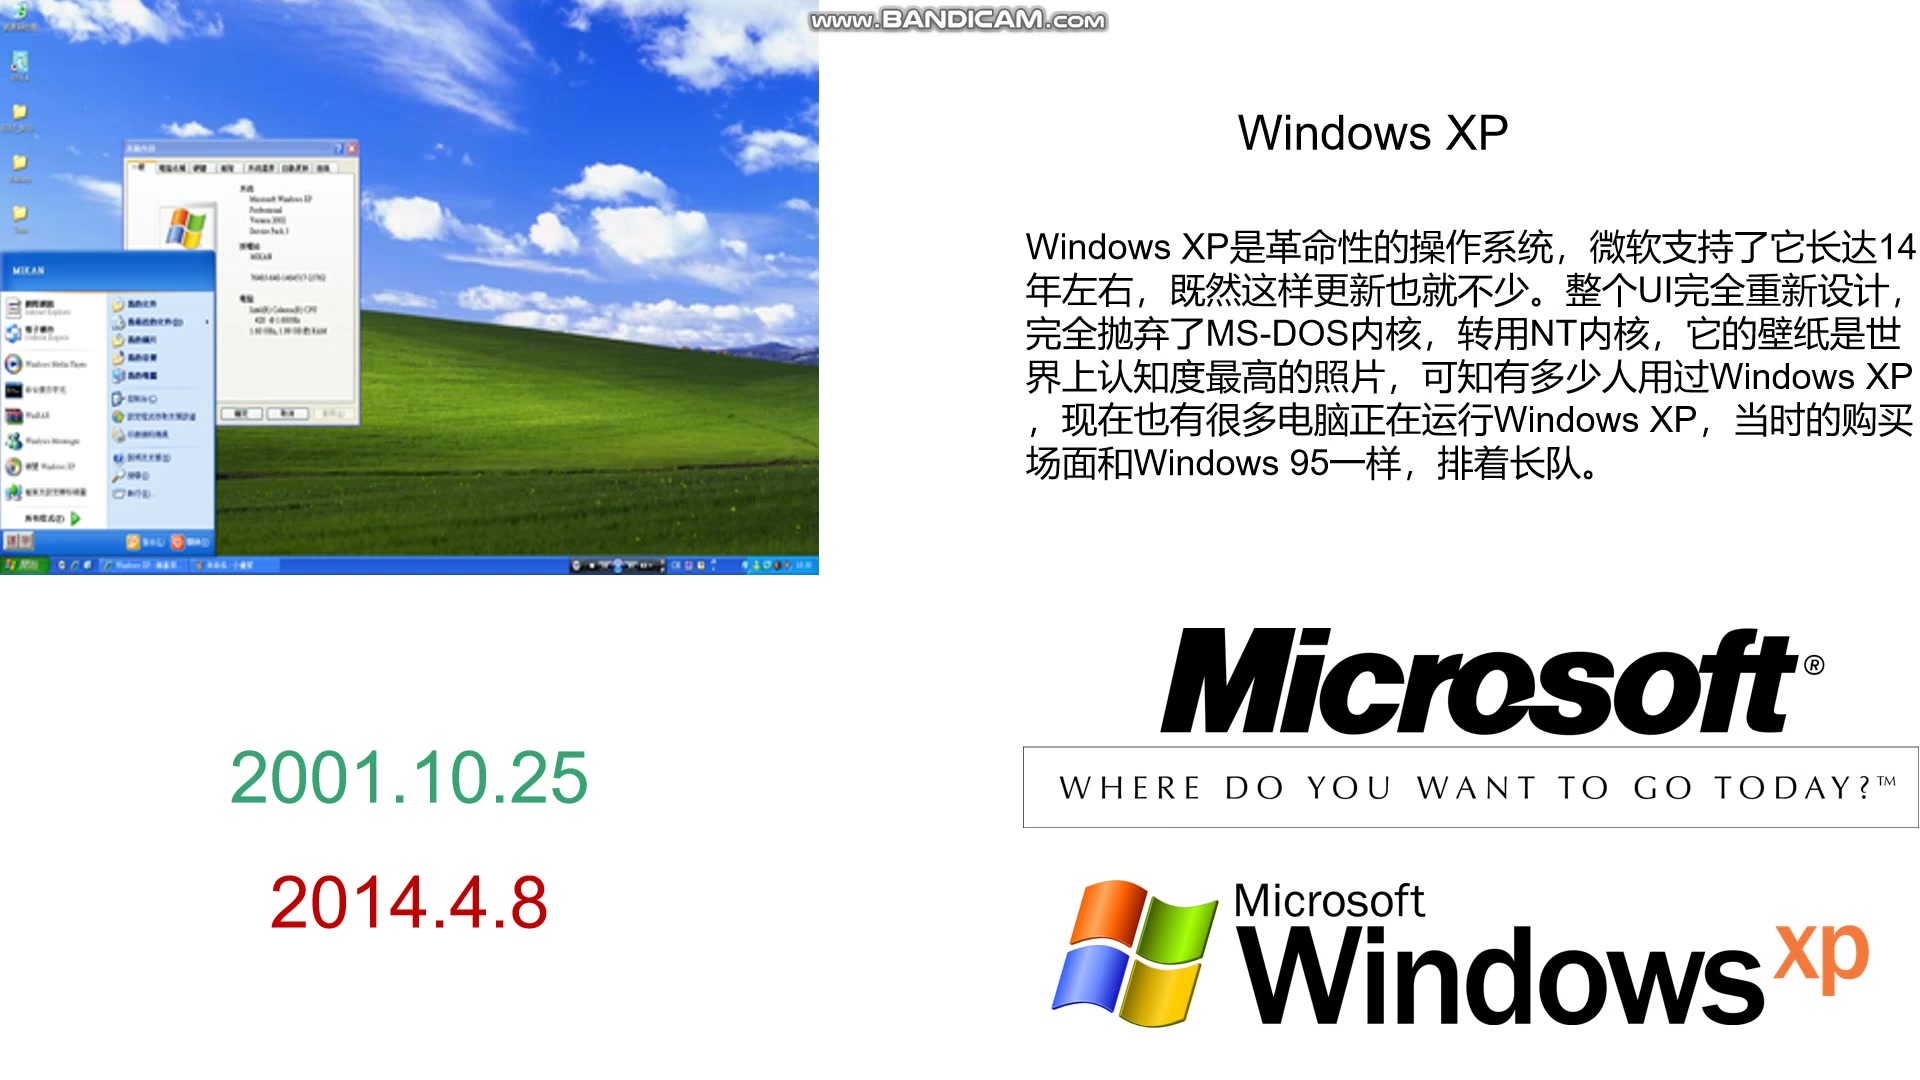 windows进化史,自制 ppt,可自行修改